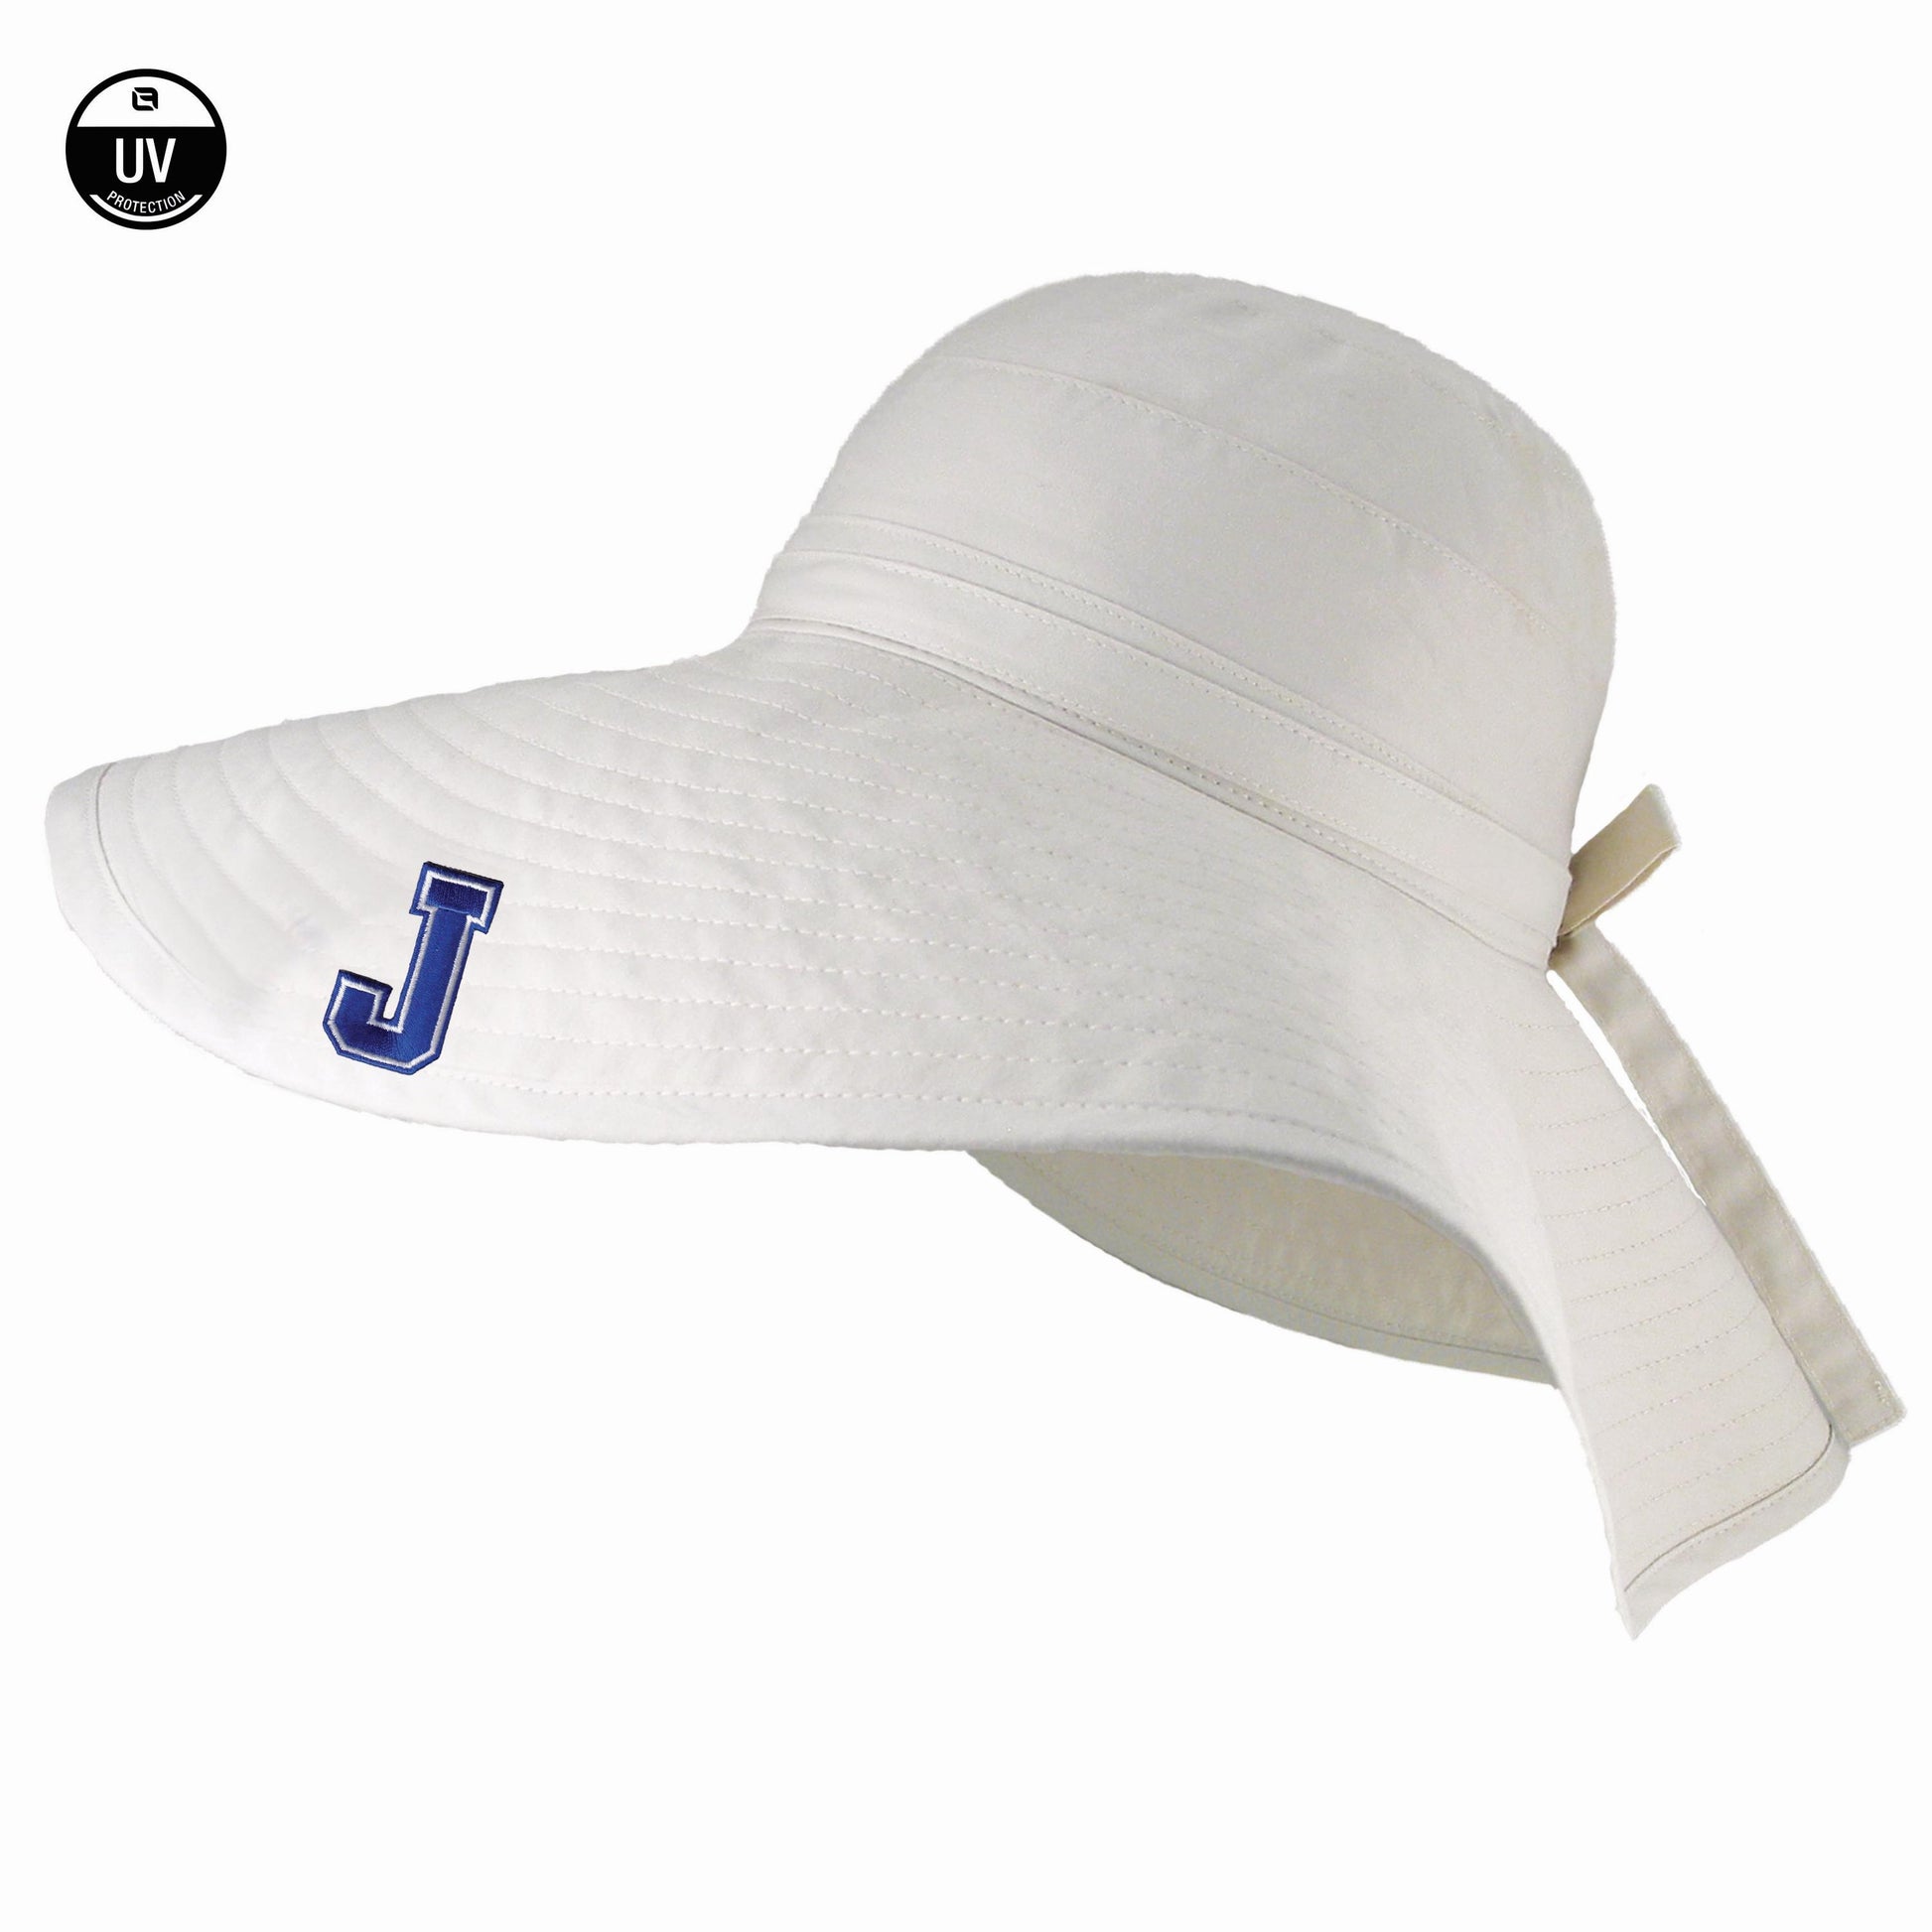 Logo Fit.  Meet the Cabana Ladies UPF Cotton Sun Hat. Color is light pale pink.  J logo on brim.